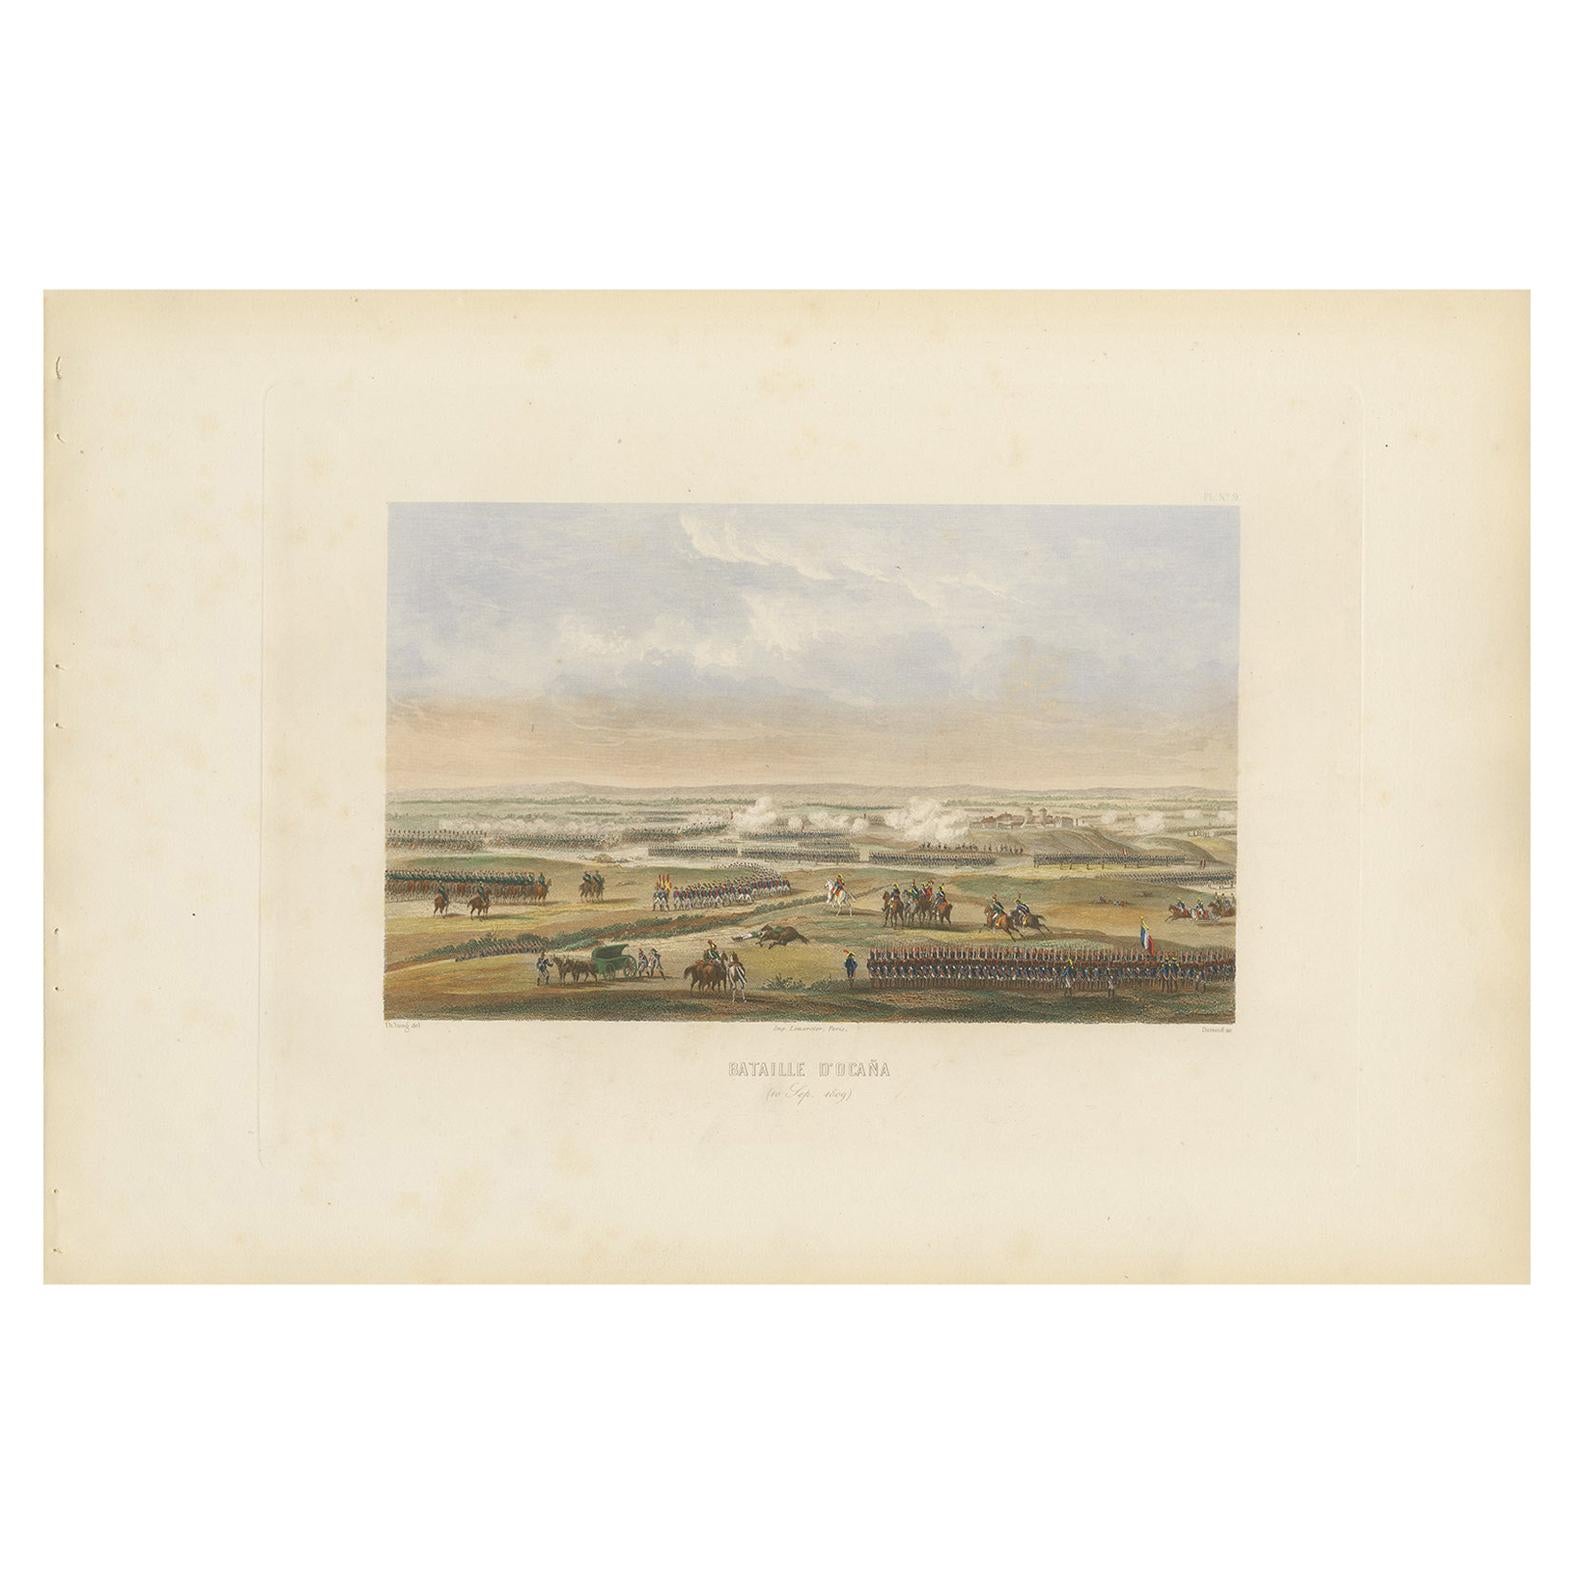 Impression ancienne de la bataille d'Ocaa, vers 1860